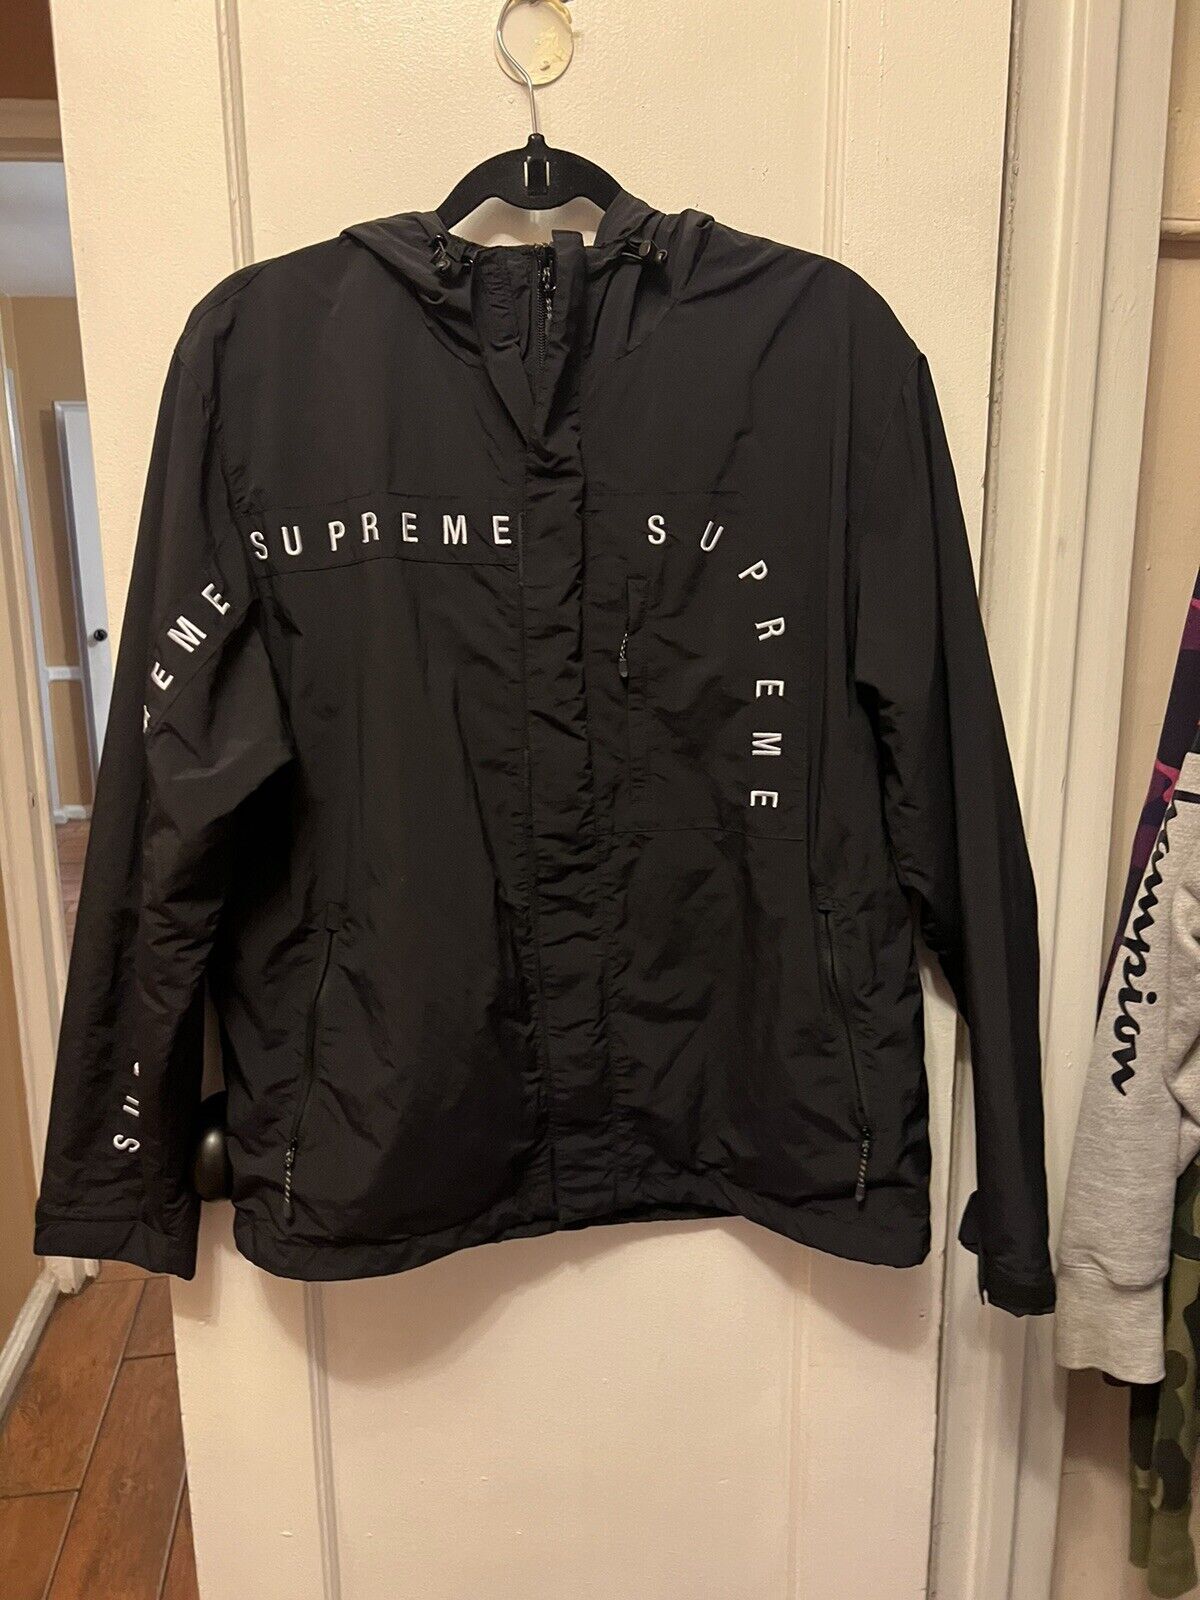 Supreme Black Jacket/windbreaker Size M